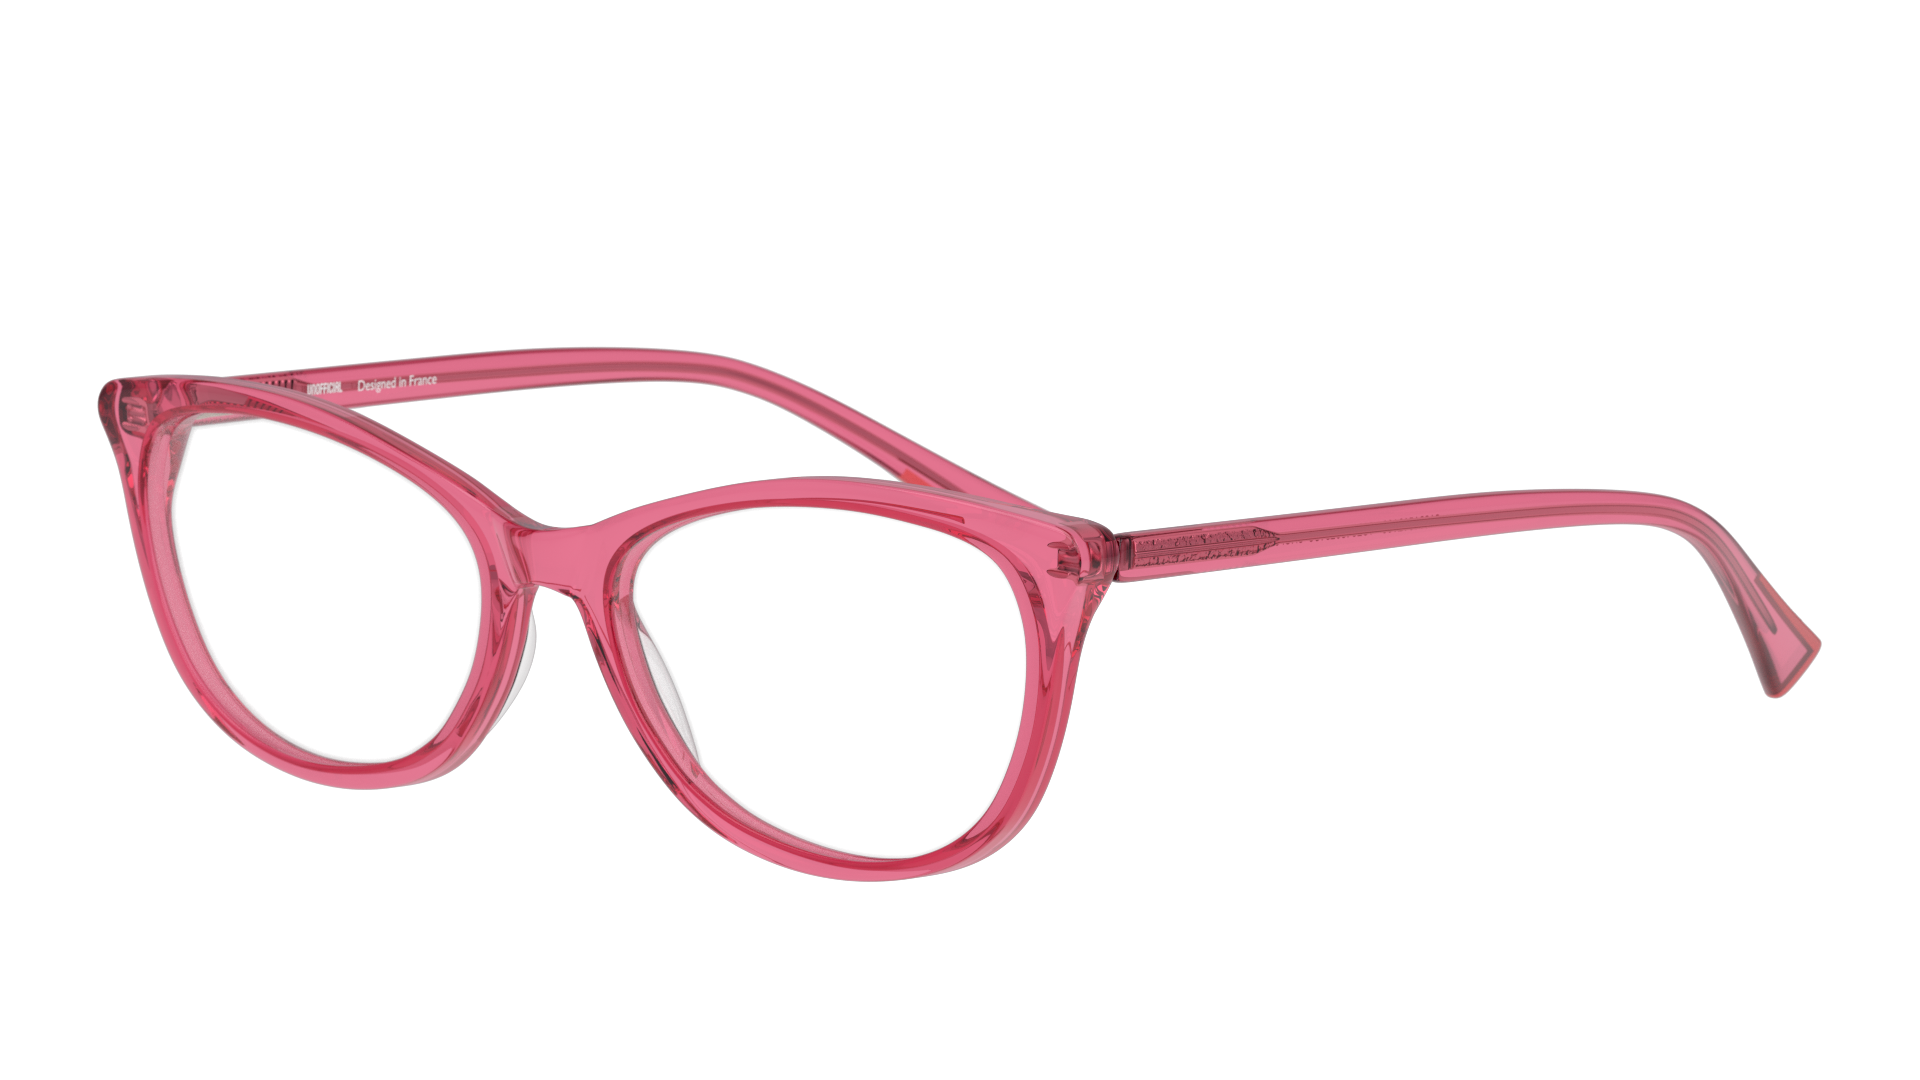 Angle_Left01 Unofficial UNOF0003 (PT00) Glasses Transparent / Transparent, Pink